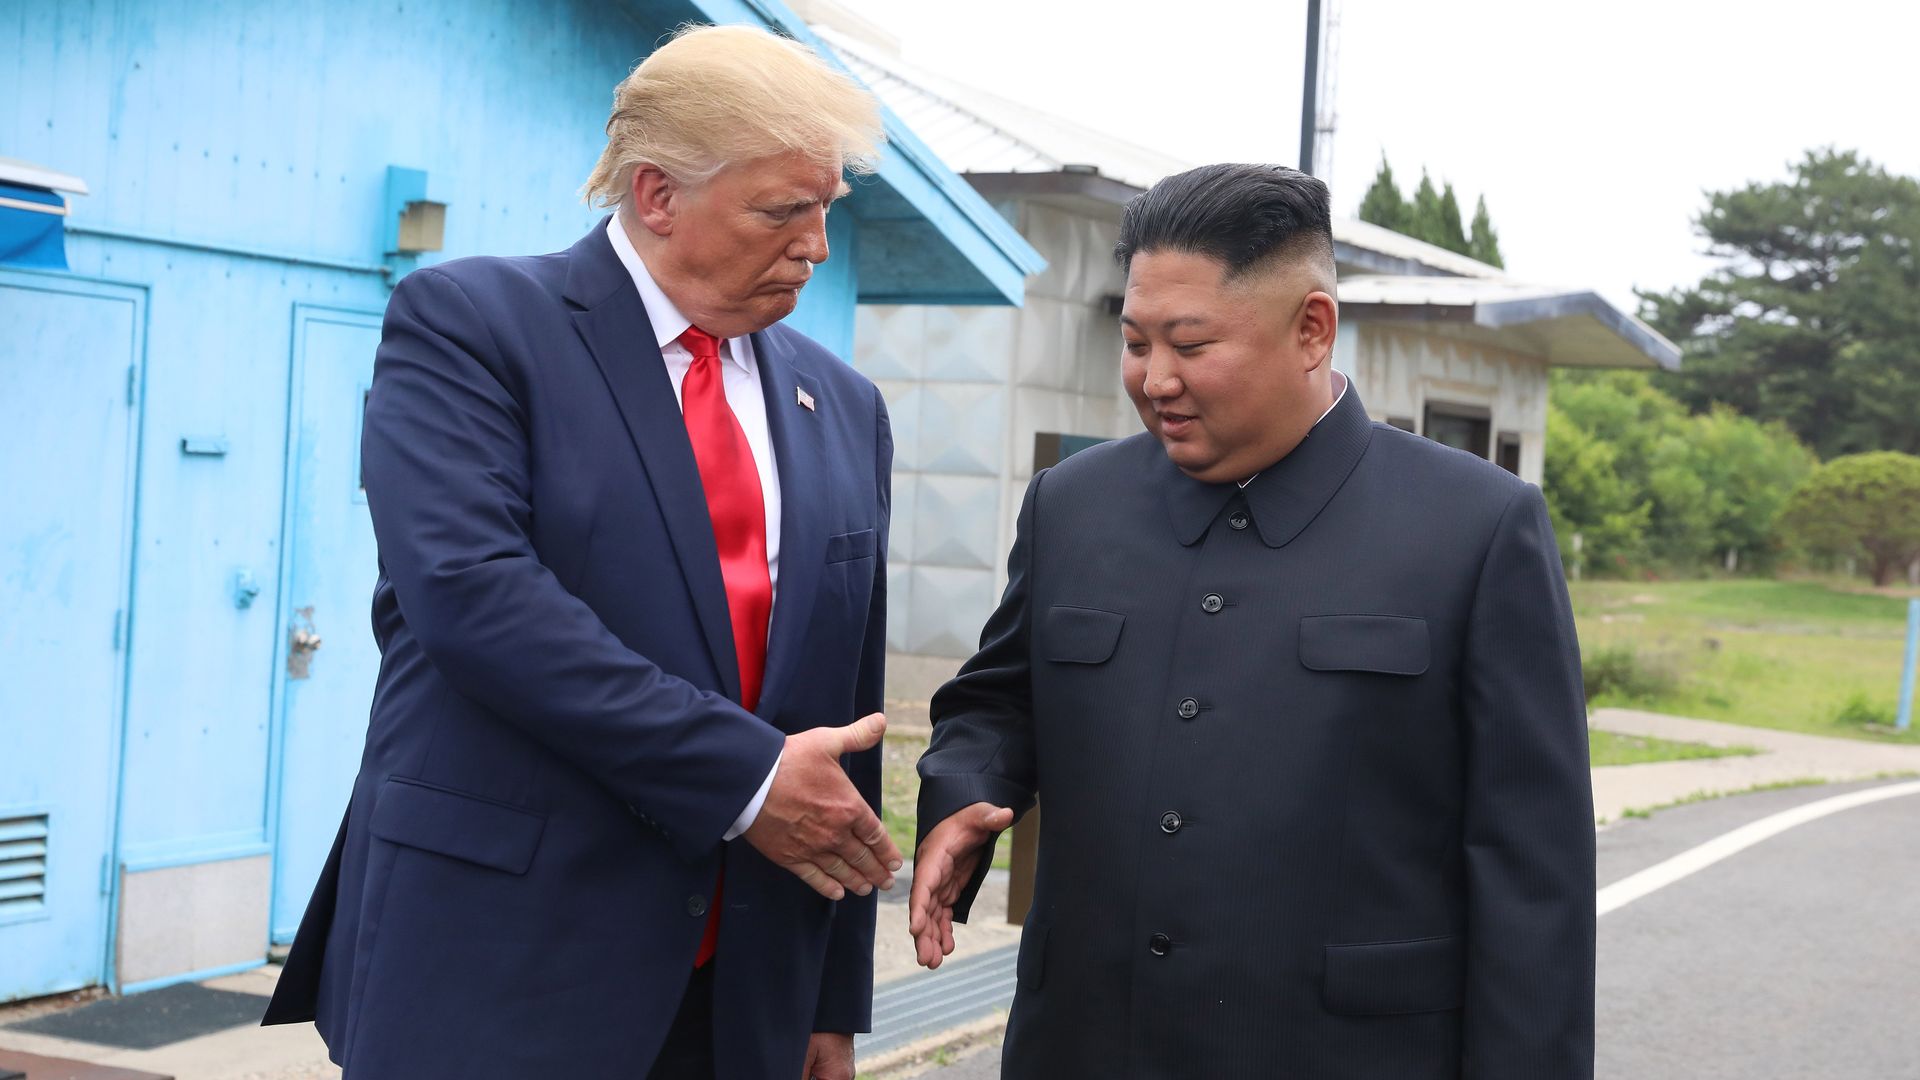 President Trump and North Korean leader Kim Jong-un shake hands at the DMZ in June 2019.